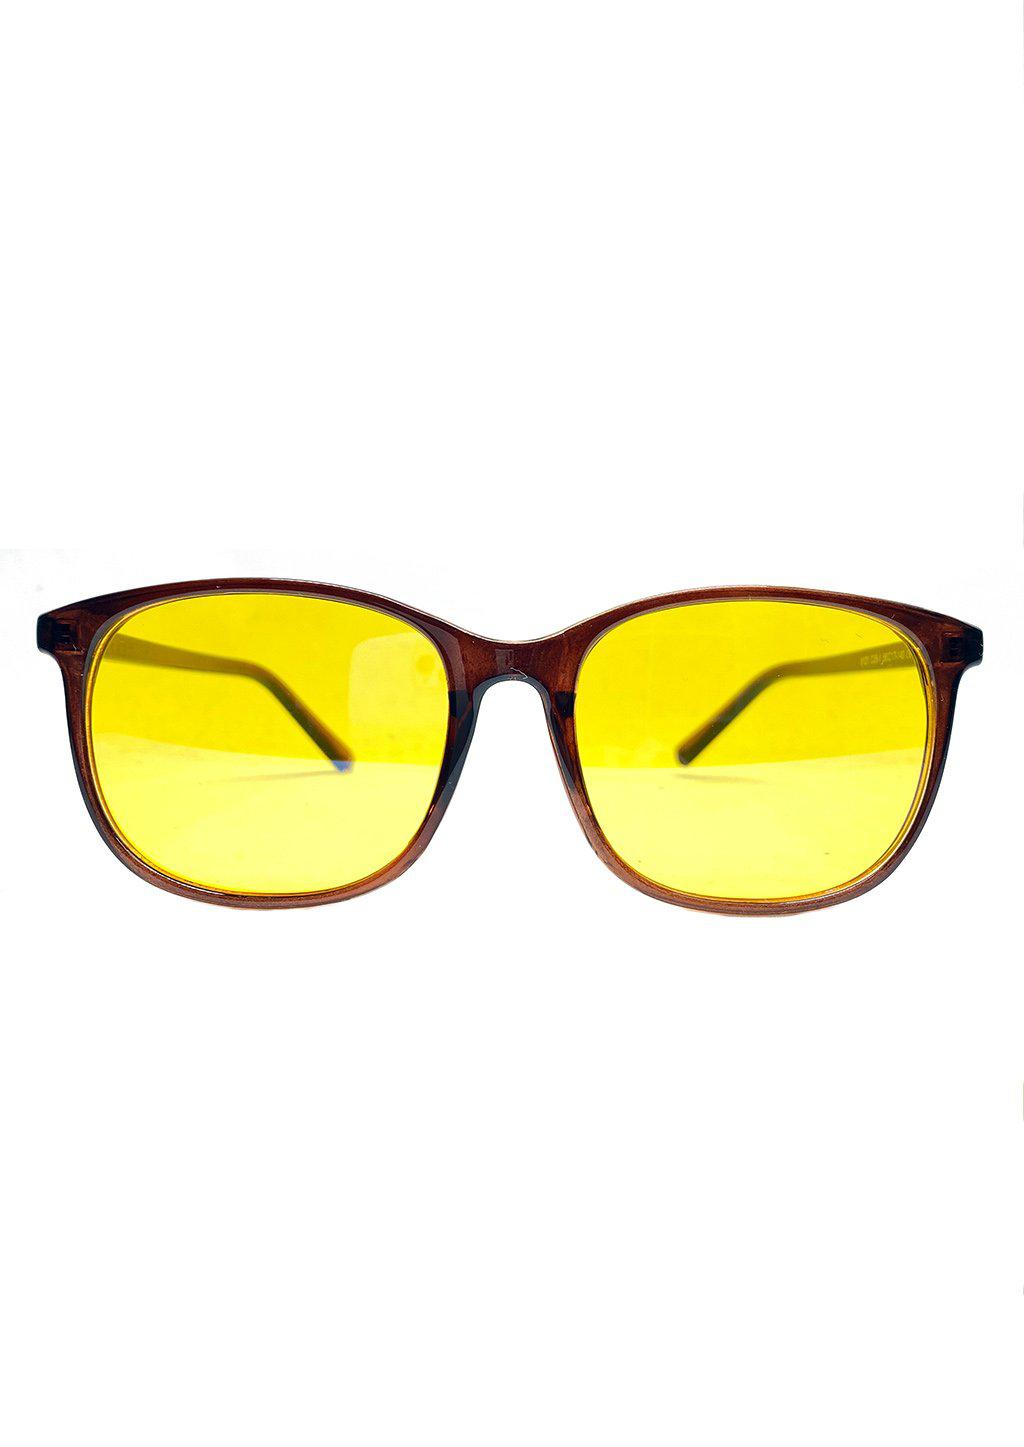 Blaulichtblockierung - Nexus - Blue-light glasses / Gaming glasses - Neo-9